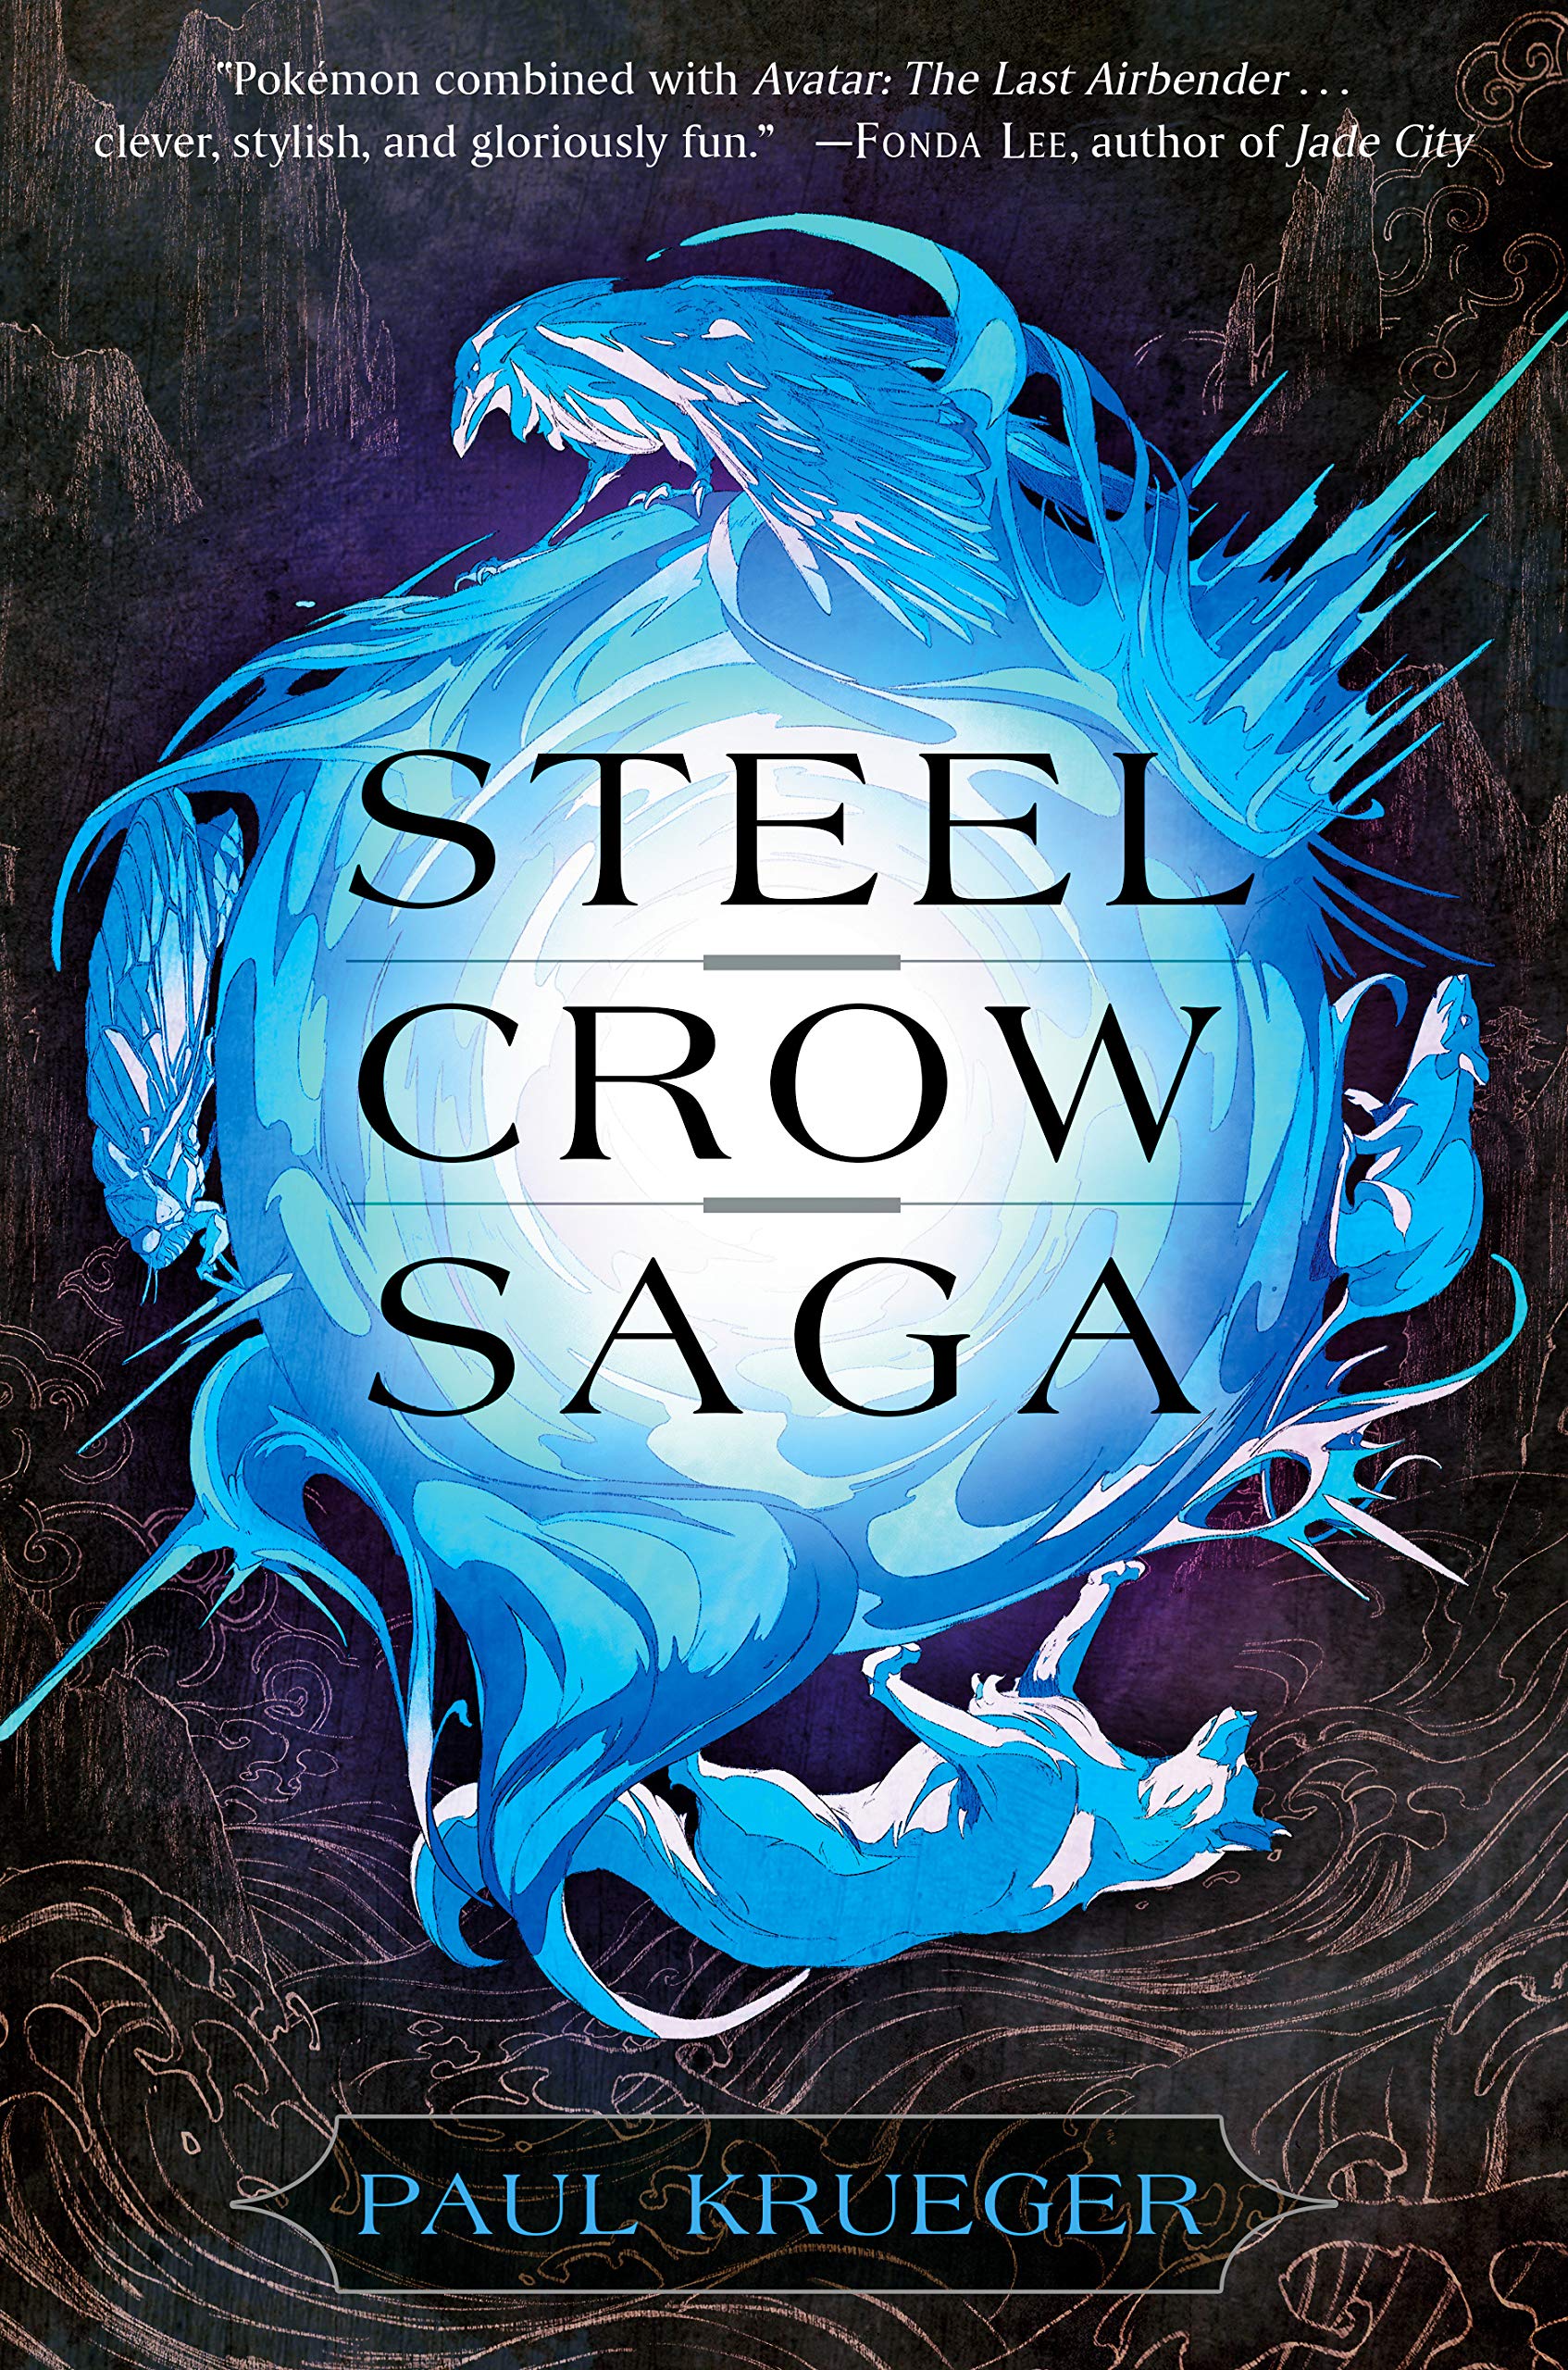 Cover of "Steel Crow Saga"